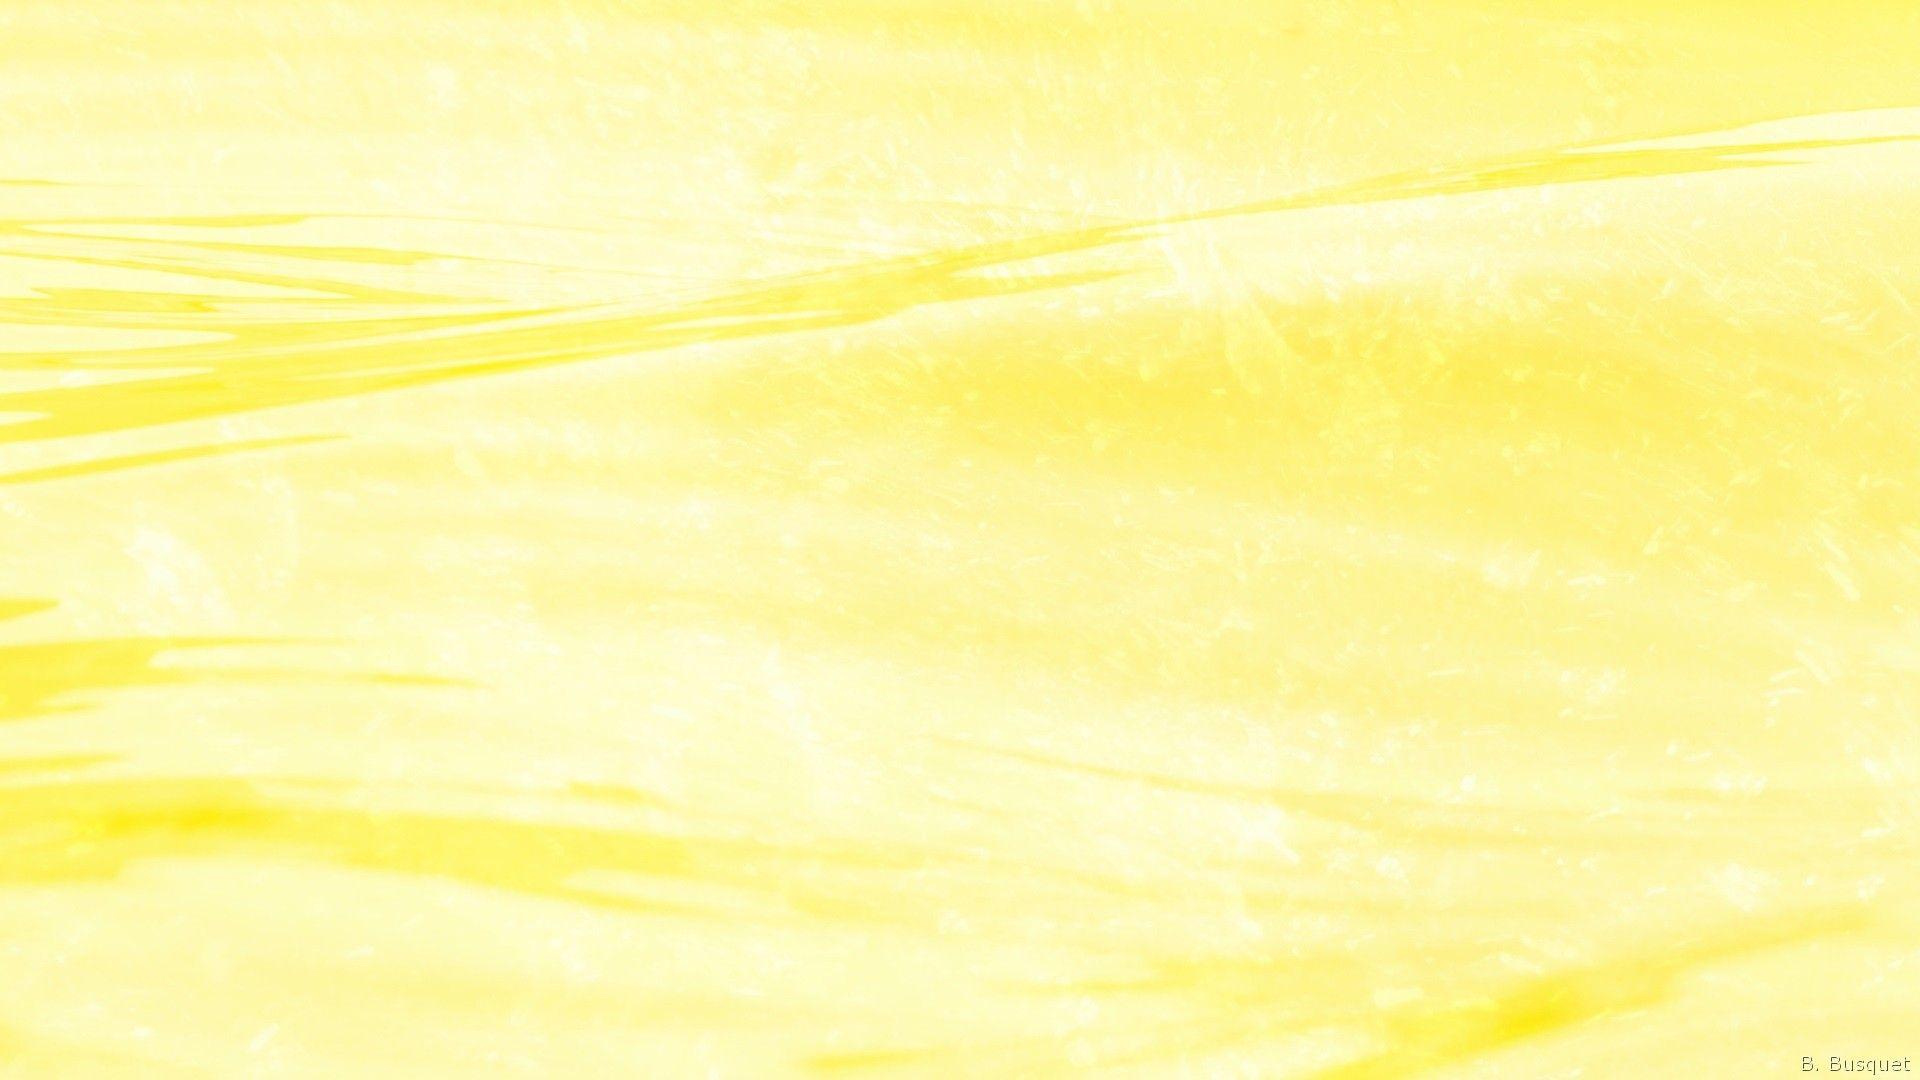 iPhoneXpaperscom  iPhone X wallpaper  sn86lightyellow sunnyblurgradation